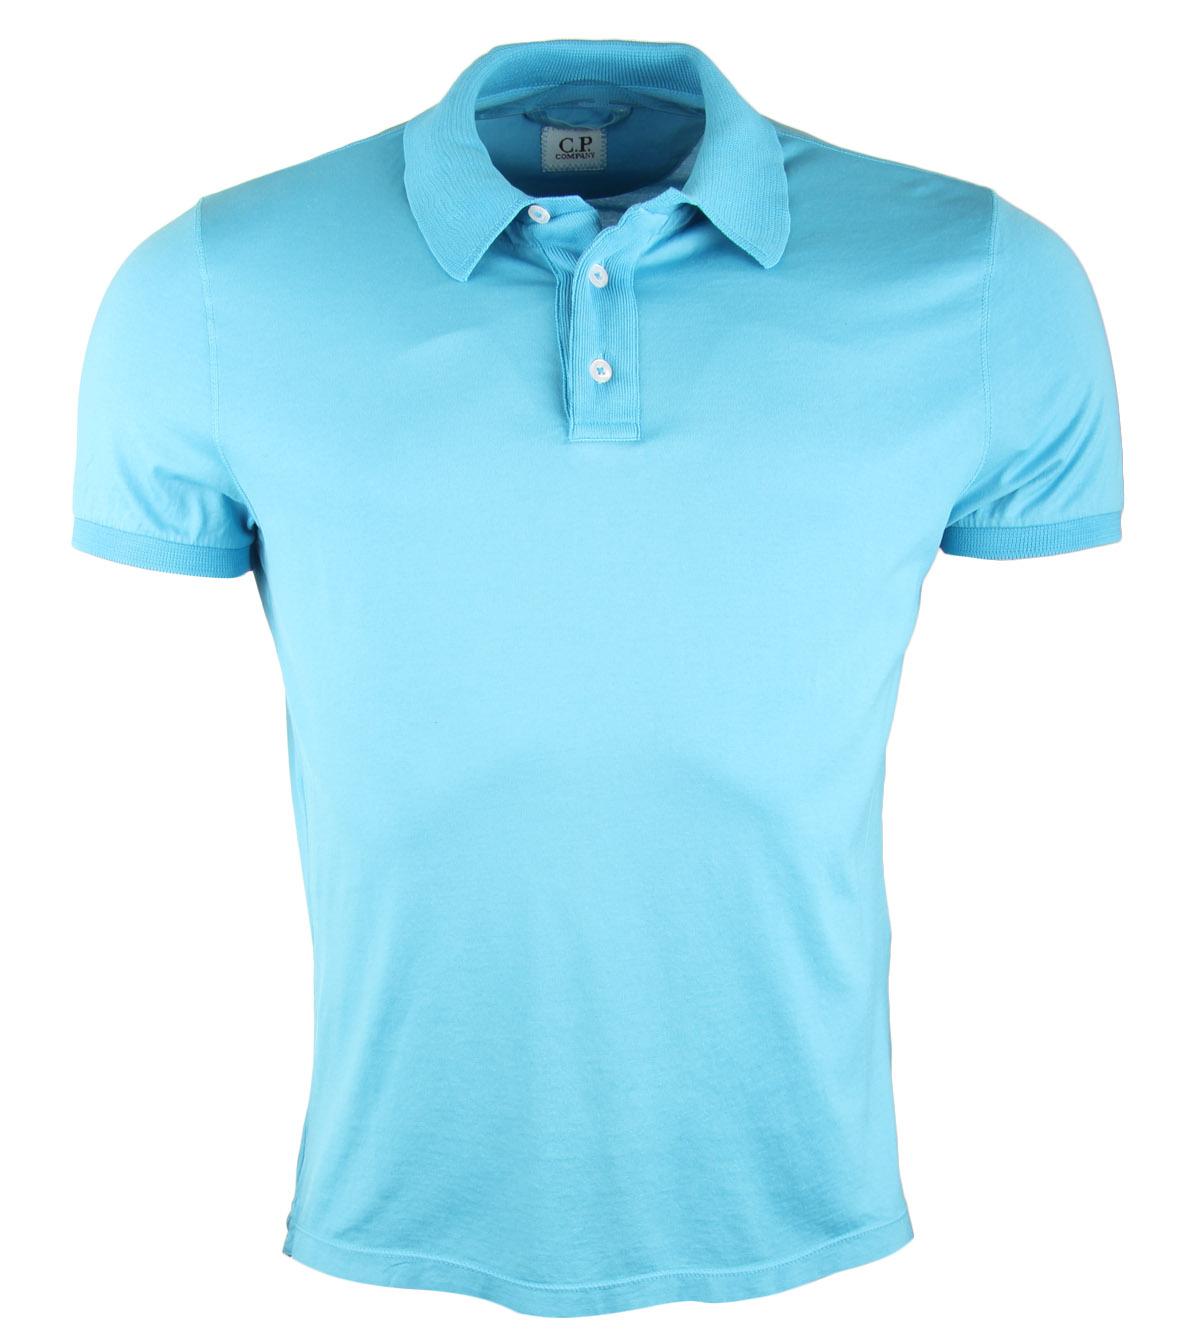 Foto CP Company Turquoise Jersey Polo Shirt-M foto 965645